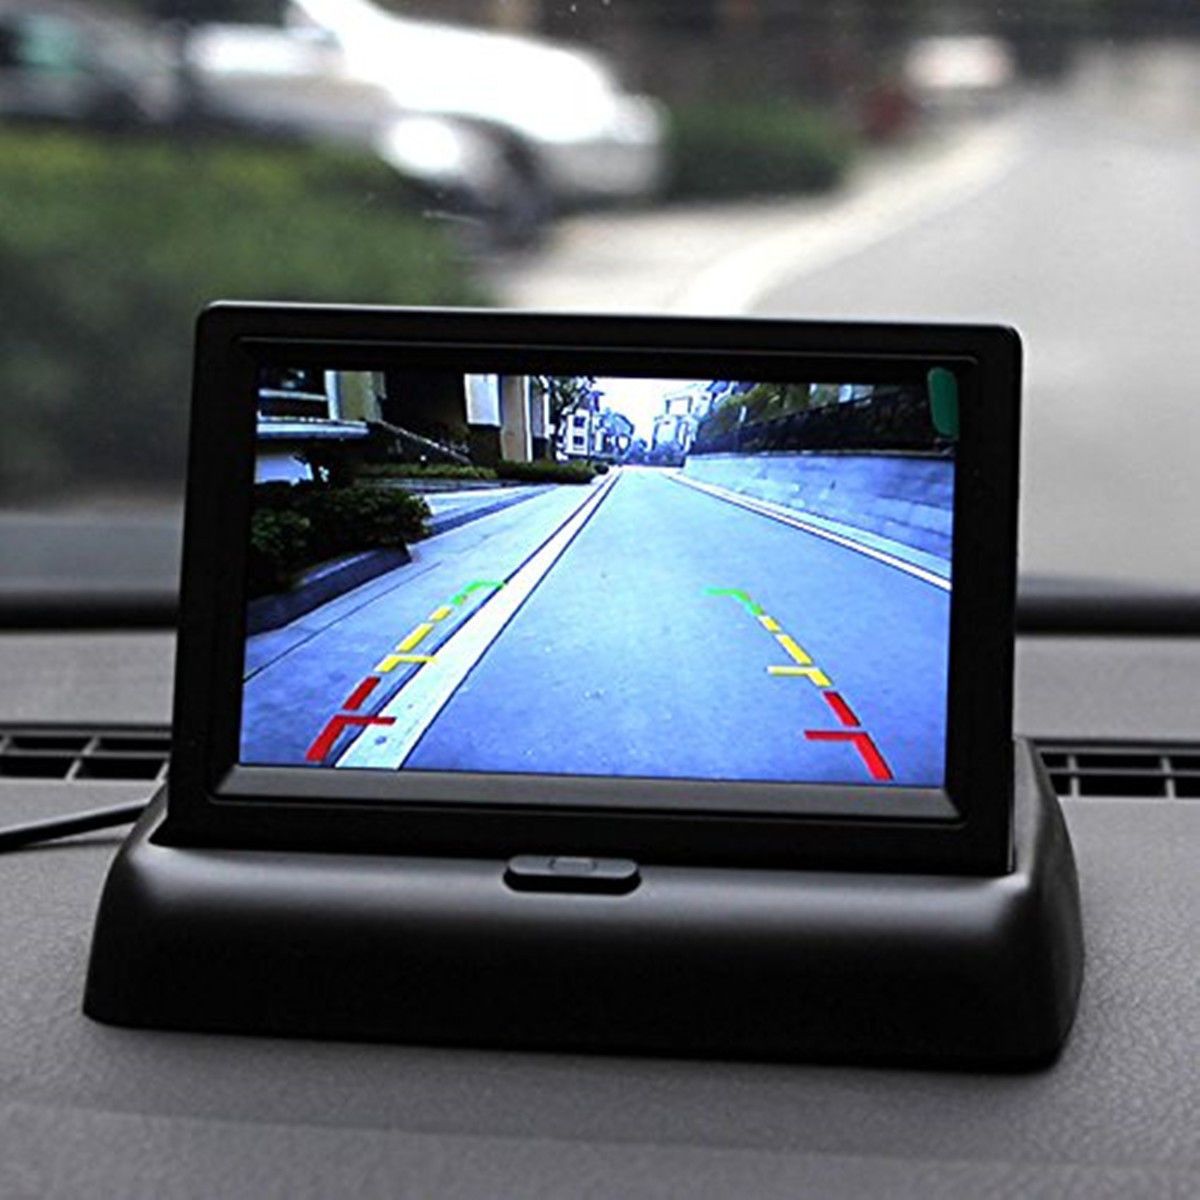 43-Inch-TFT-LCD-Monitor-LED-IR-Reversing-Camera-Car-Rear-View-Kit-For-Truck-Bus-1130499